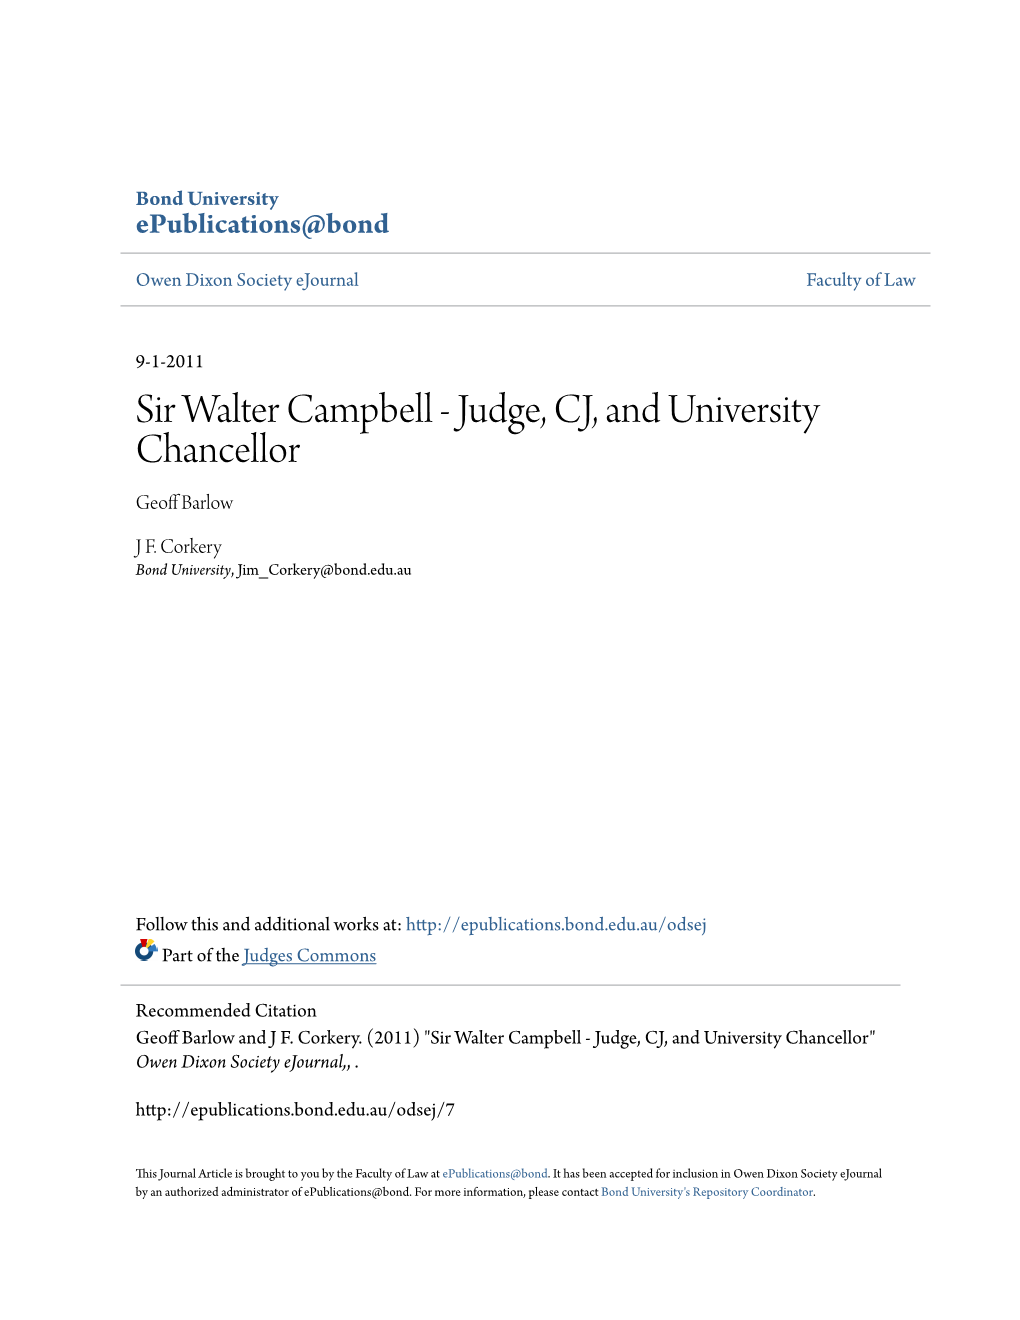 Sir Walter Campbell Â•' Judge, CJ, and University Chancellor